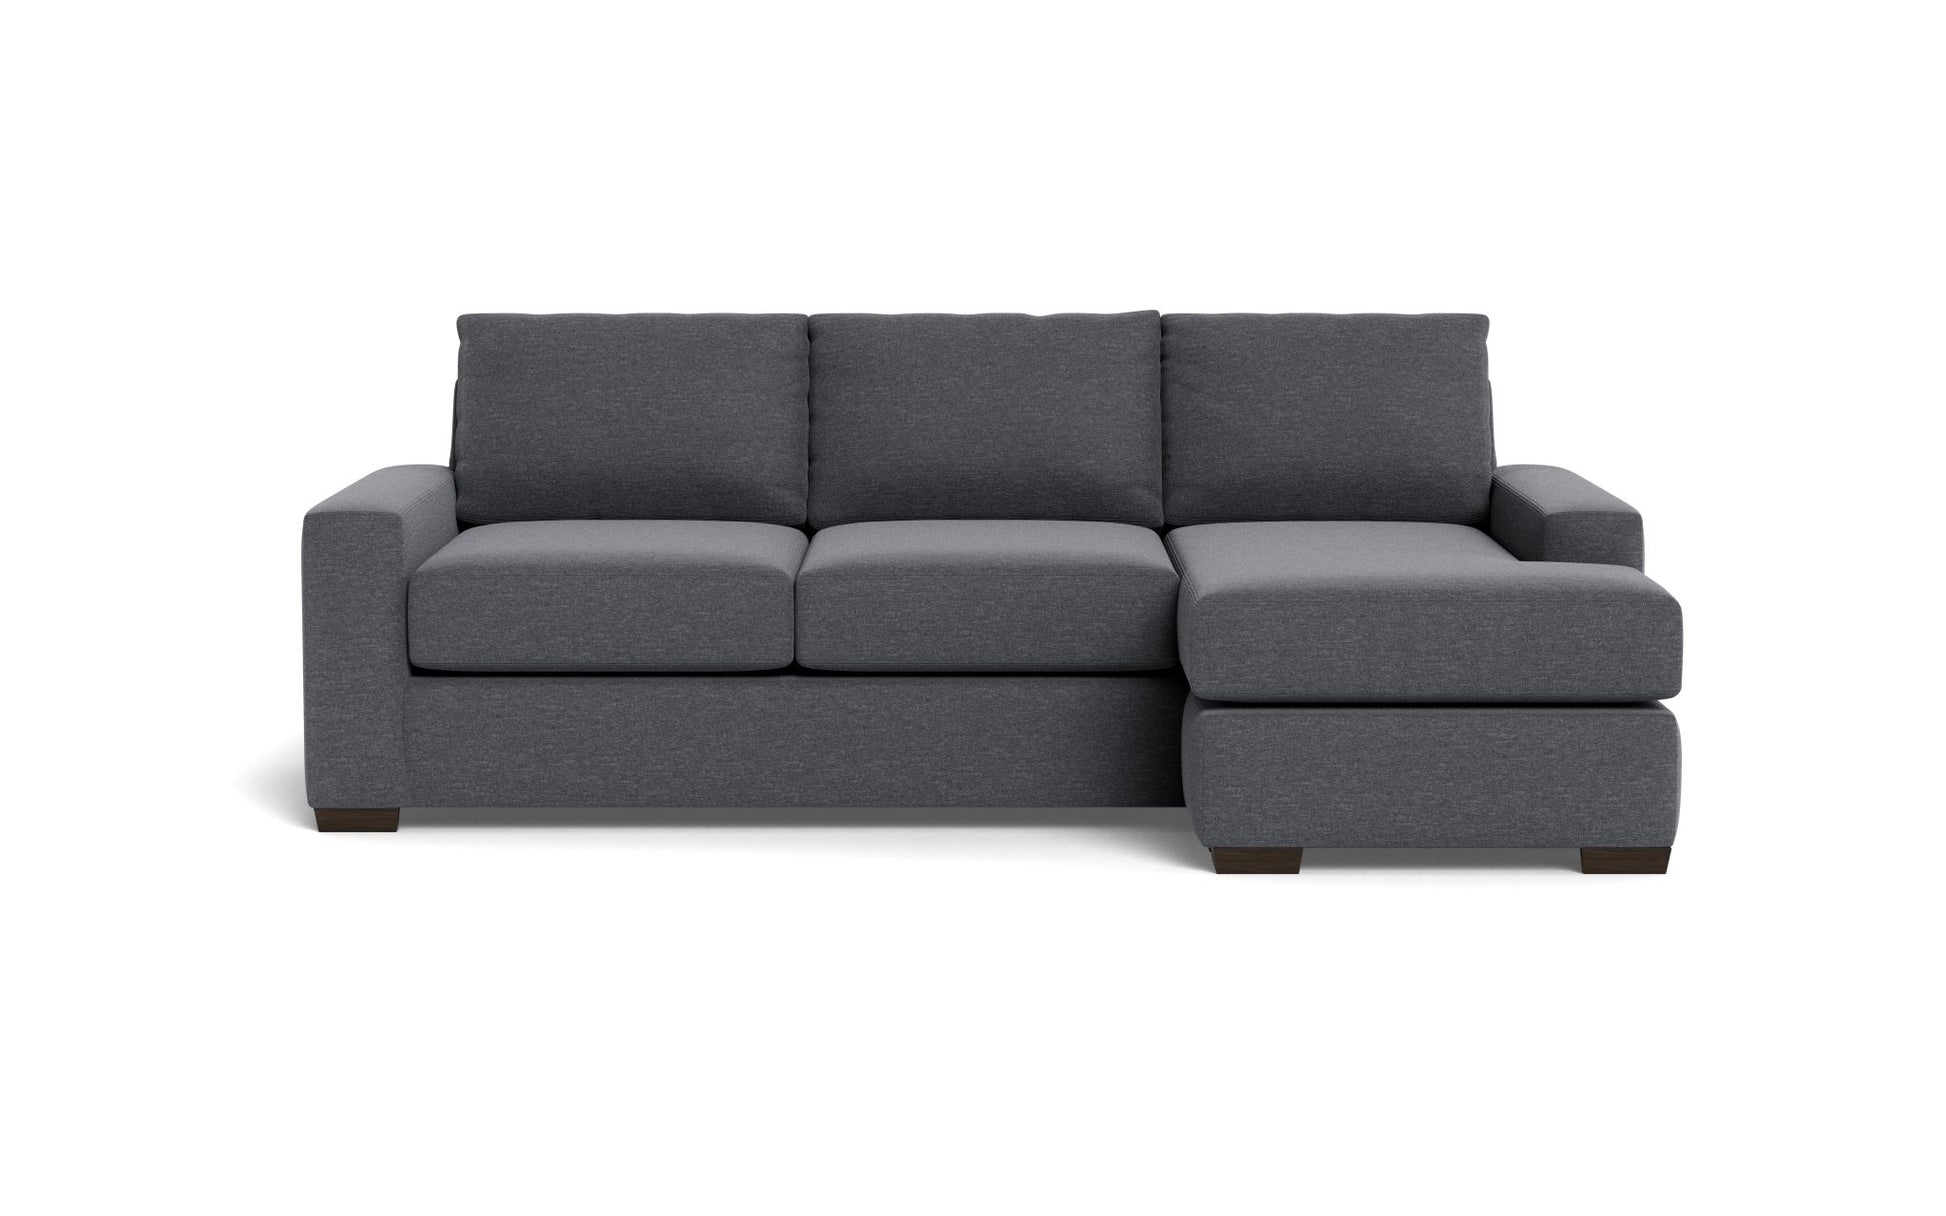 Mas Mesa Reversible Chaise Sofa - Bennett Charcoal